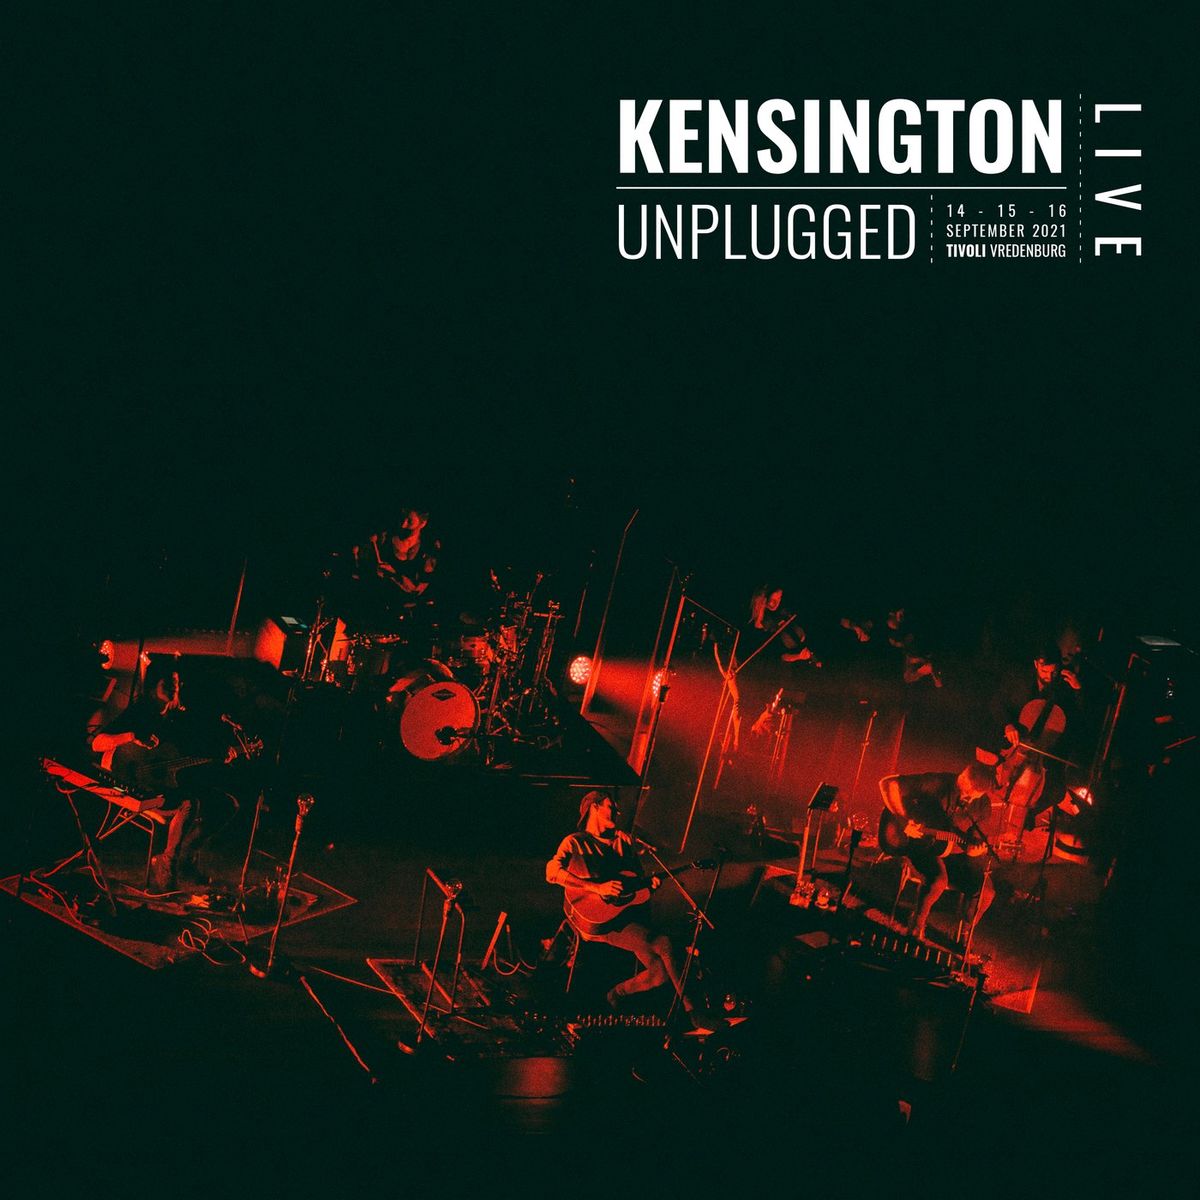 Kensington 7 albums